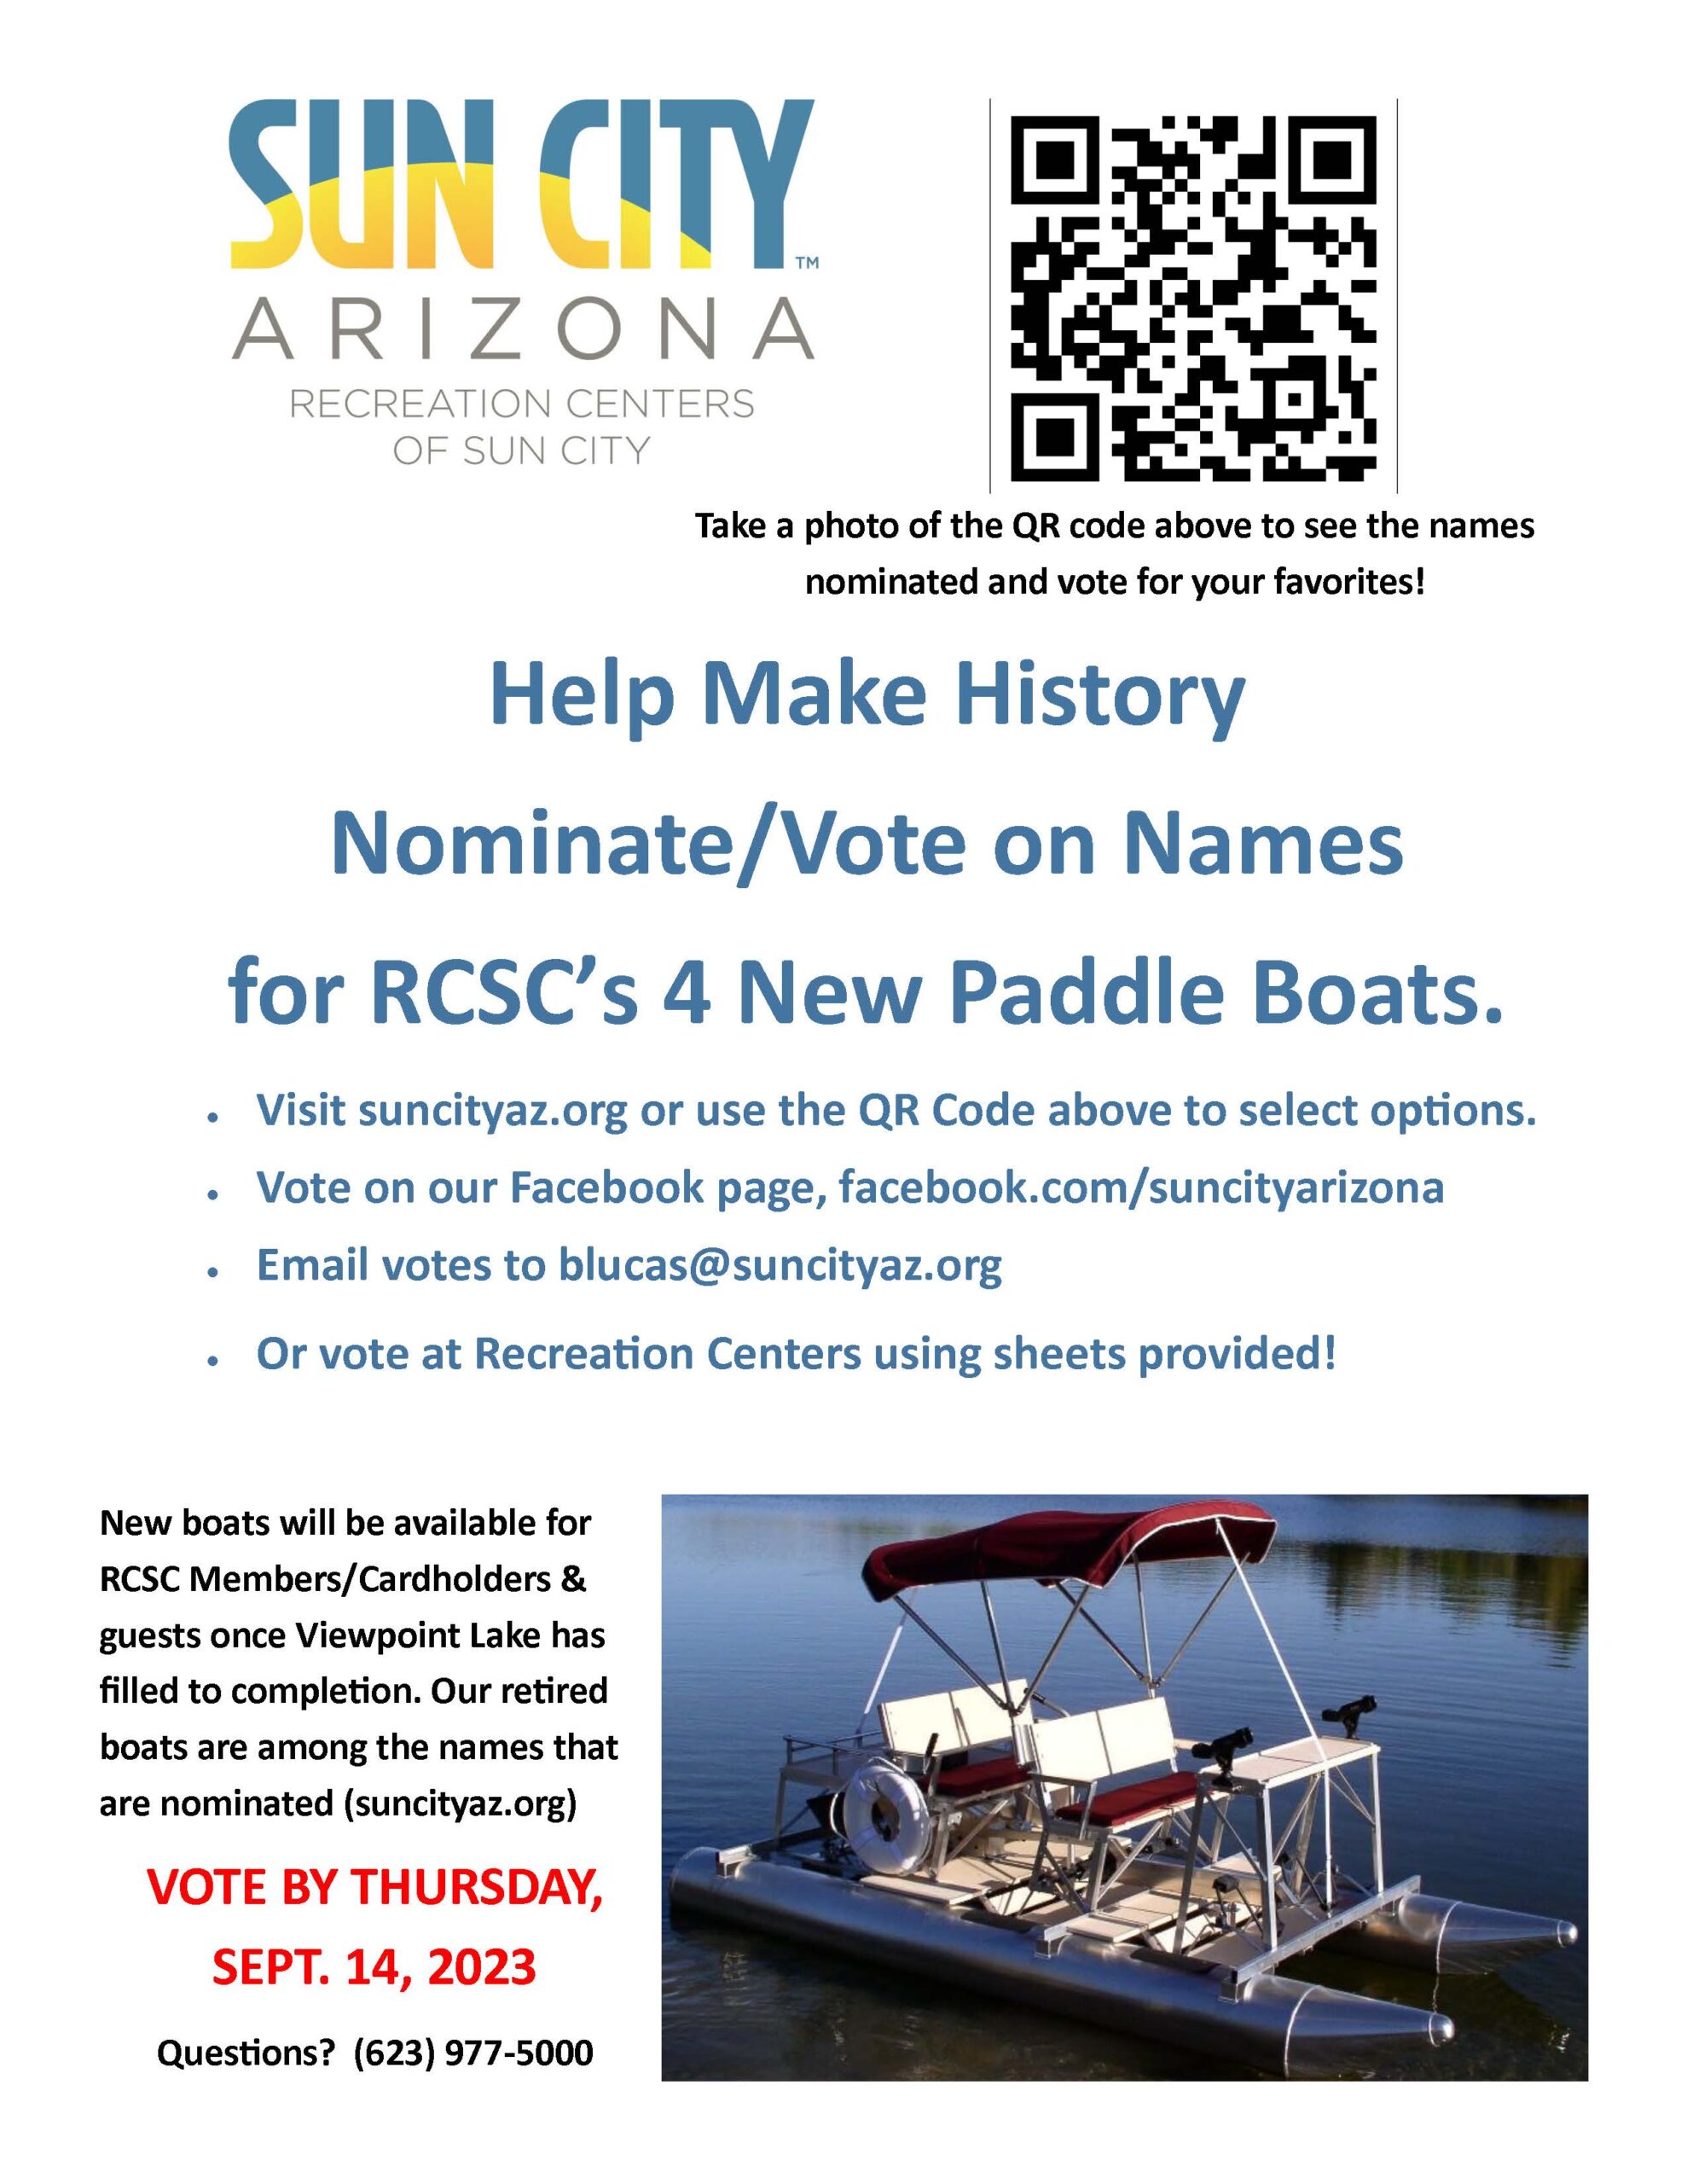 Paddle Boat Naming Contest - Sun City, Arizona - The Original Fun City!